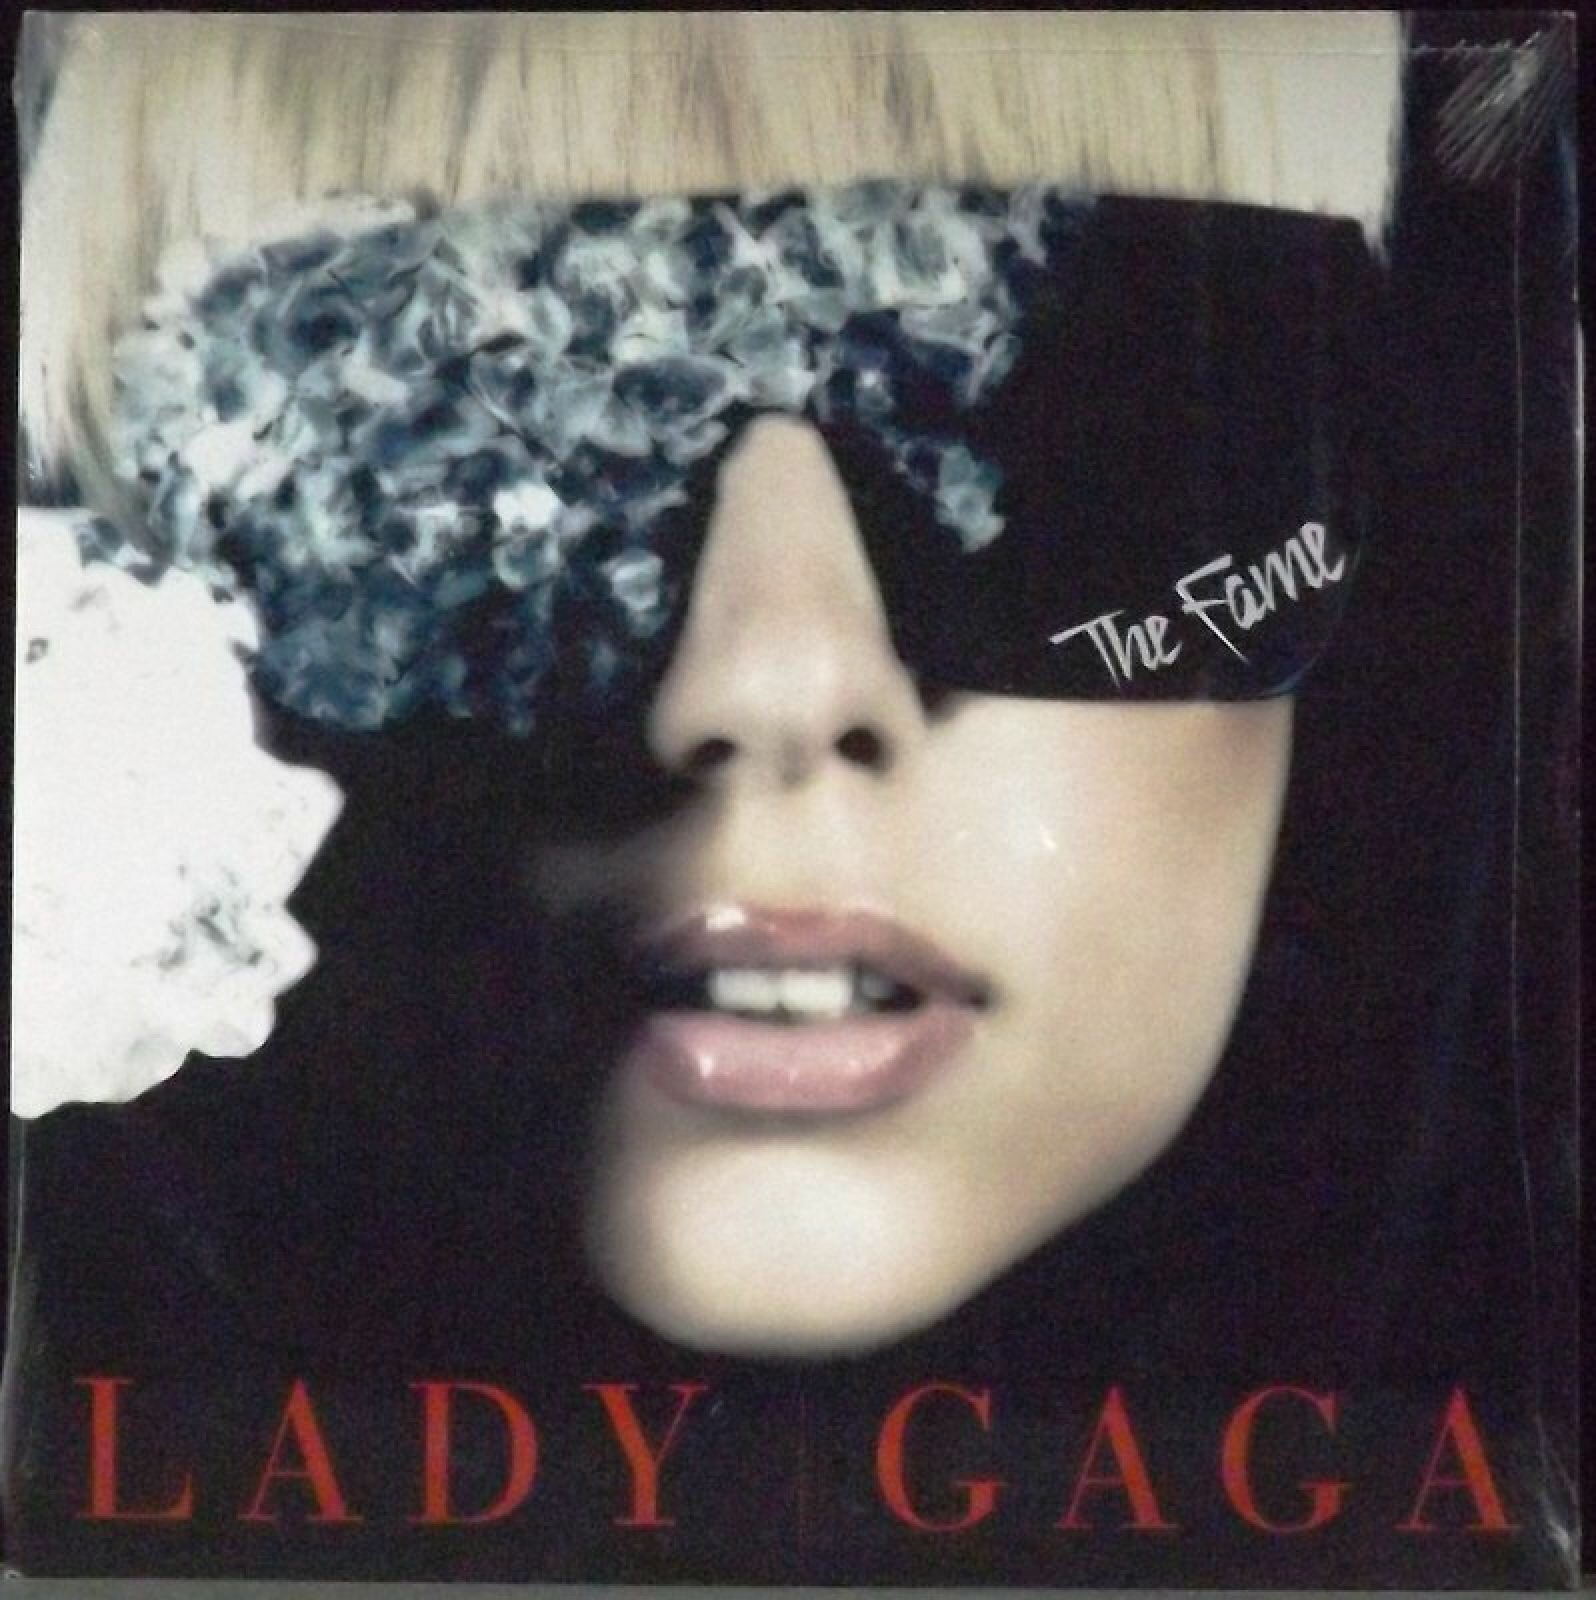 Виниловая пластинка Lady Gaga "The Fame" LP